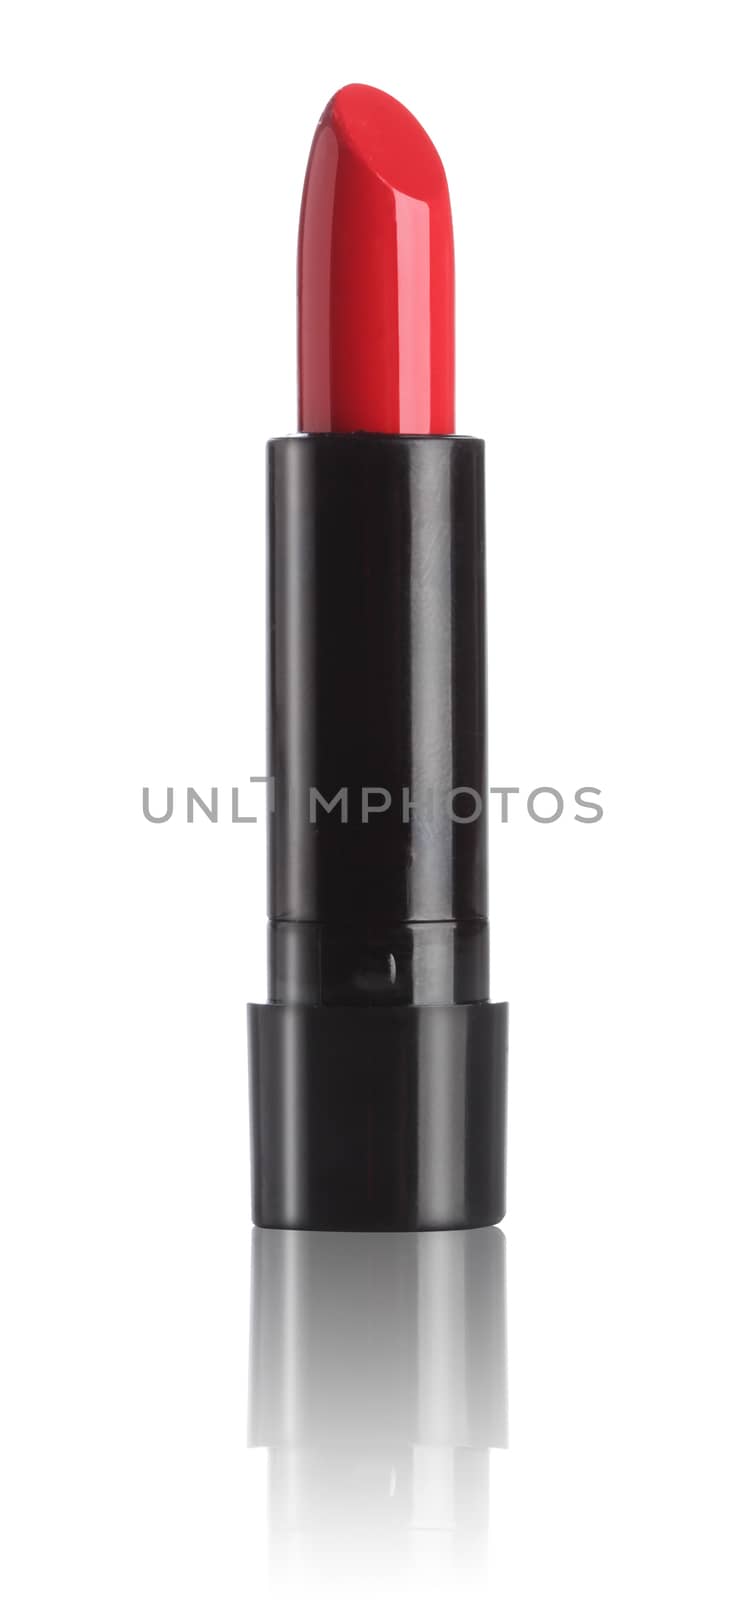 Red shiny lipstick isolated on white bacground